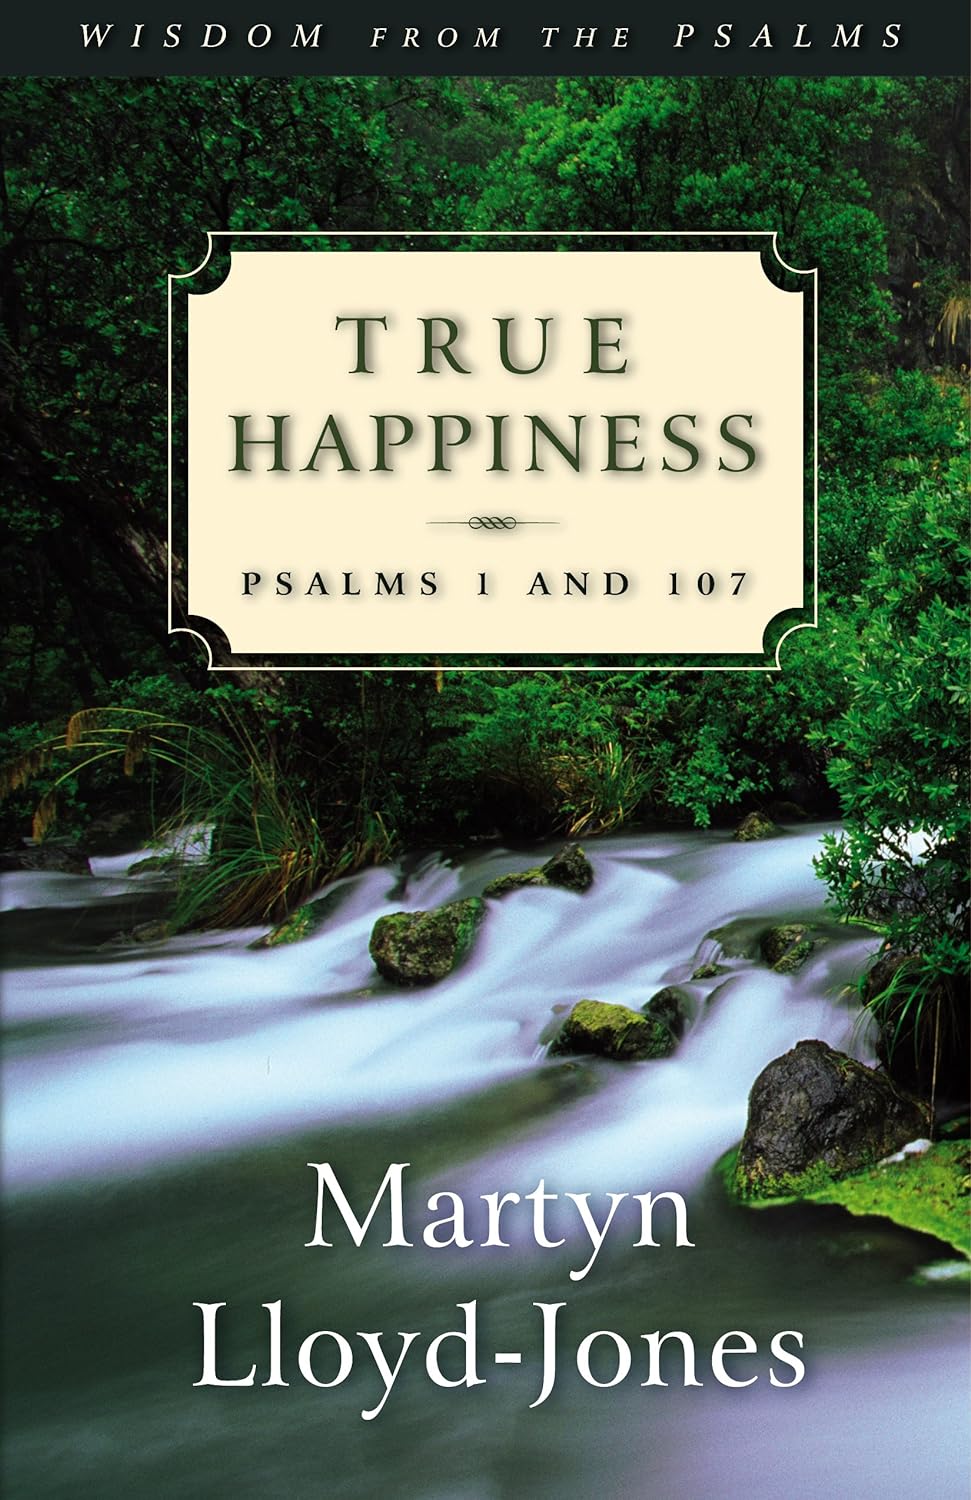 True Happiness: Psalms 1 & 107 - Martyn Lloyd-Jones